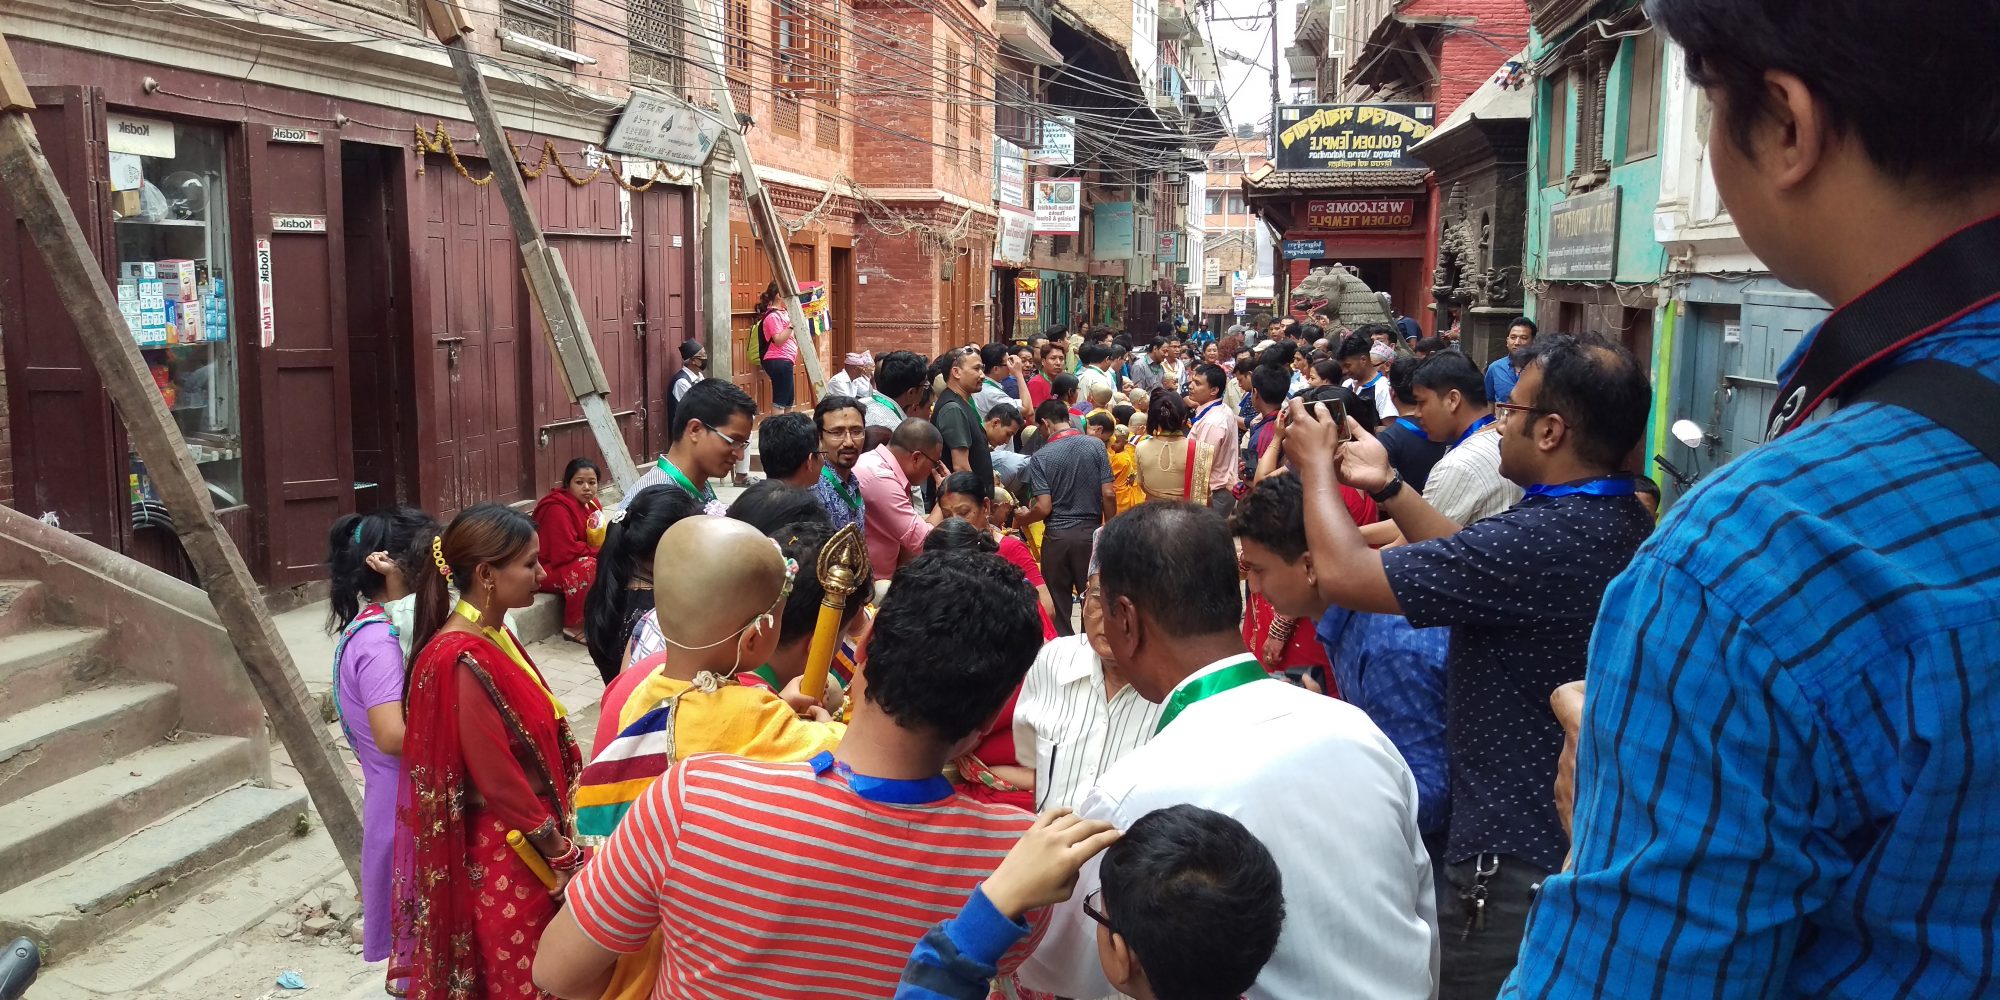 crowd of people in narrow street